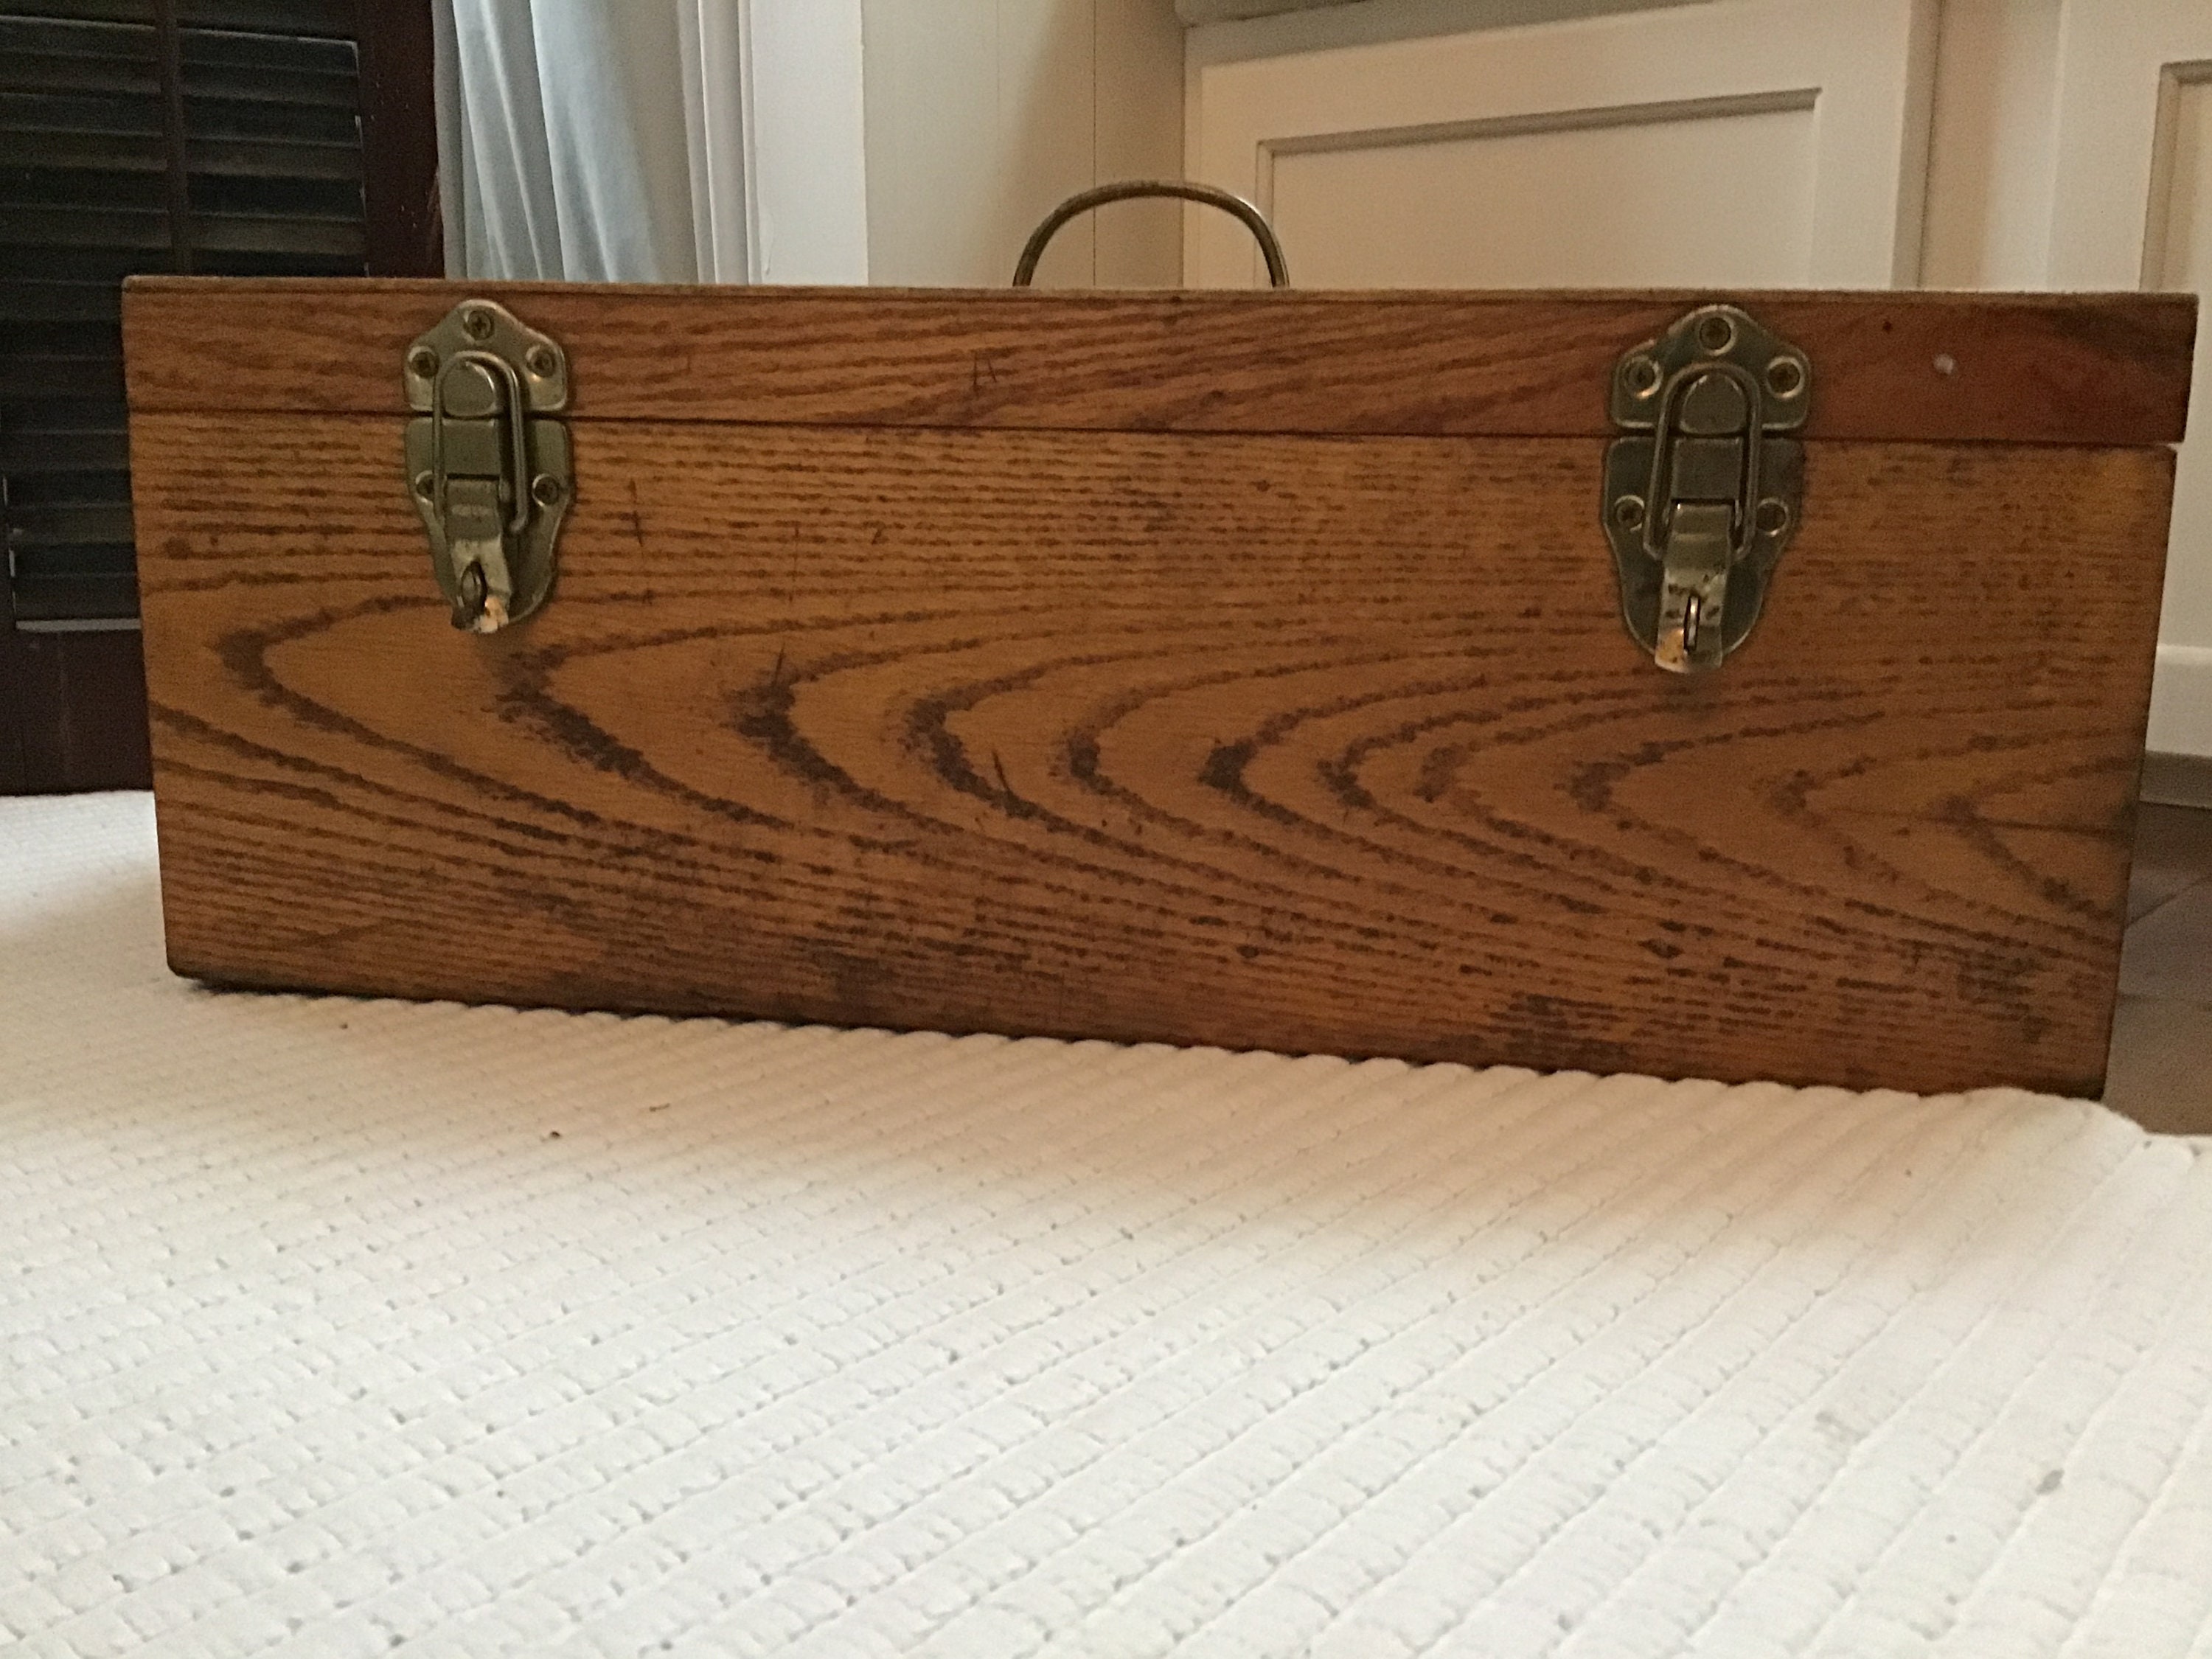 Wooden Tackle Box -  Canada